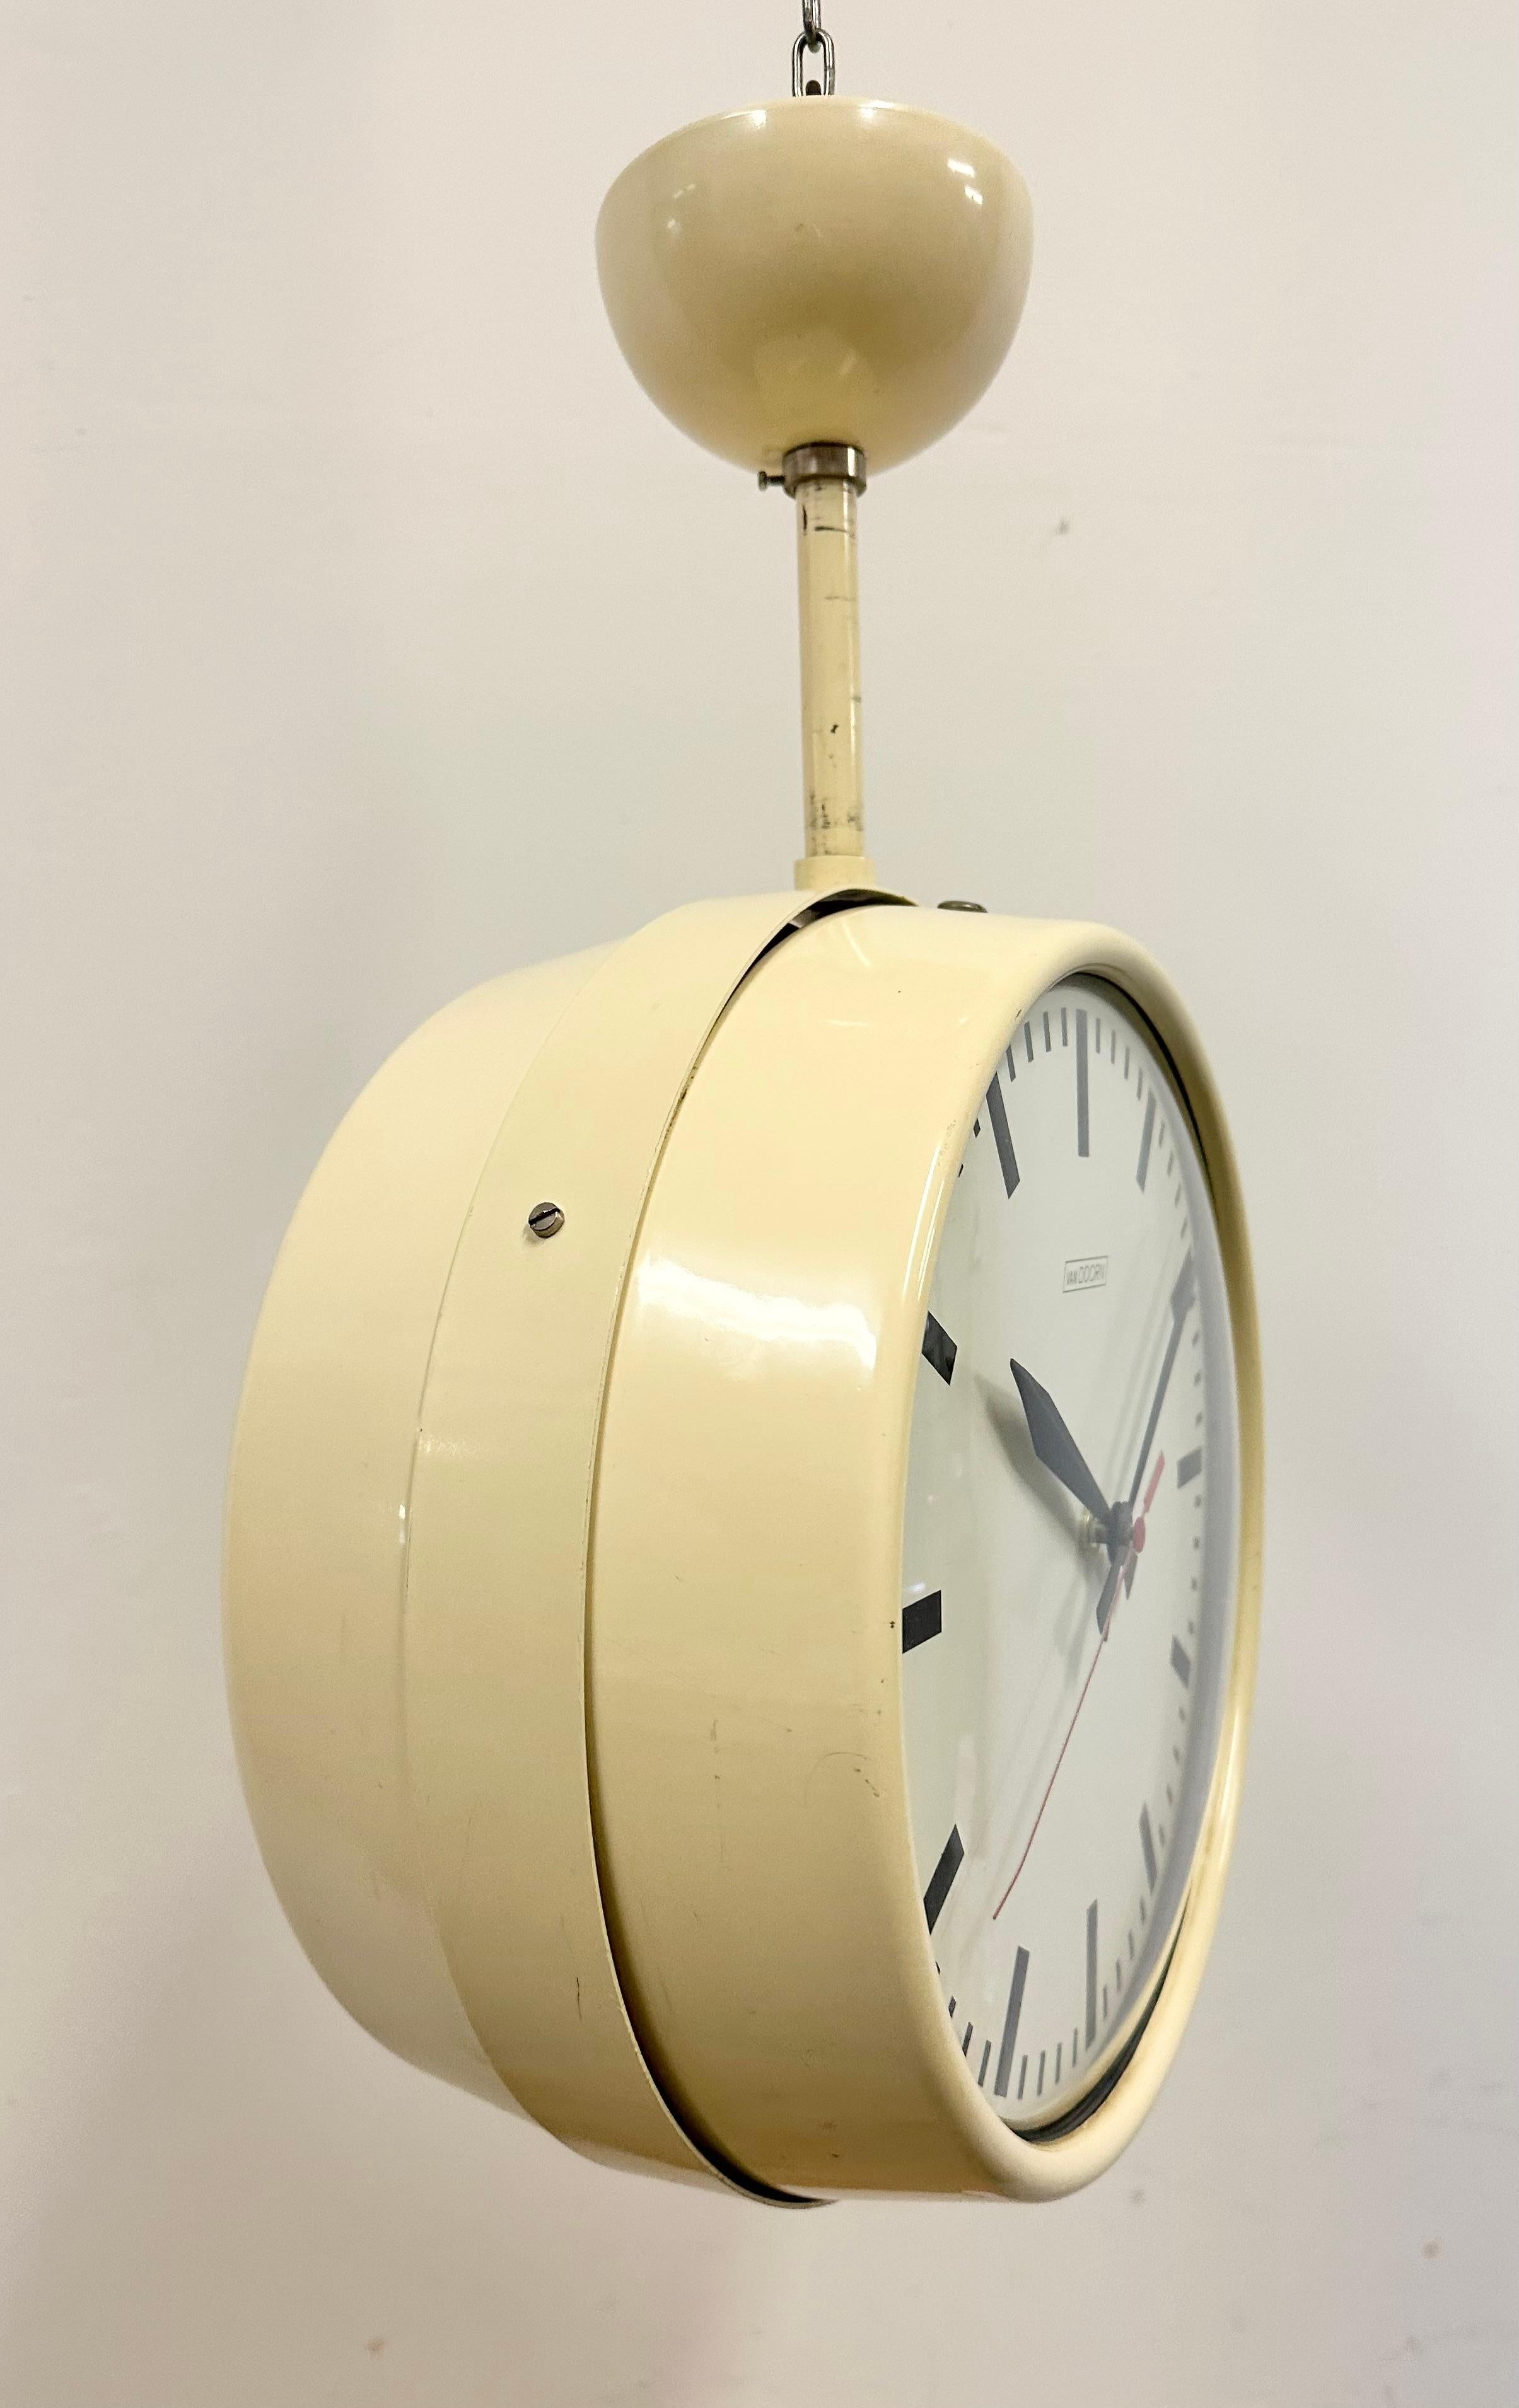 Industrial Vintage Beige Double Sided School or Station Ceiling Clock from Van Doorn, 1960s For Sale